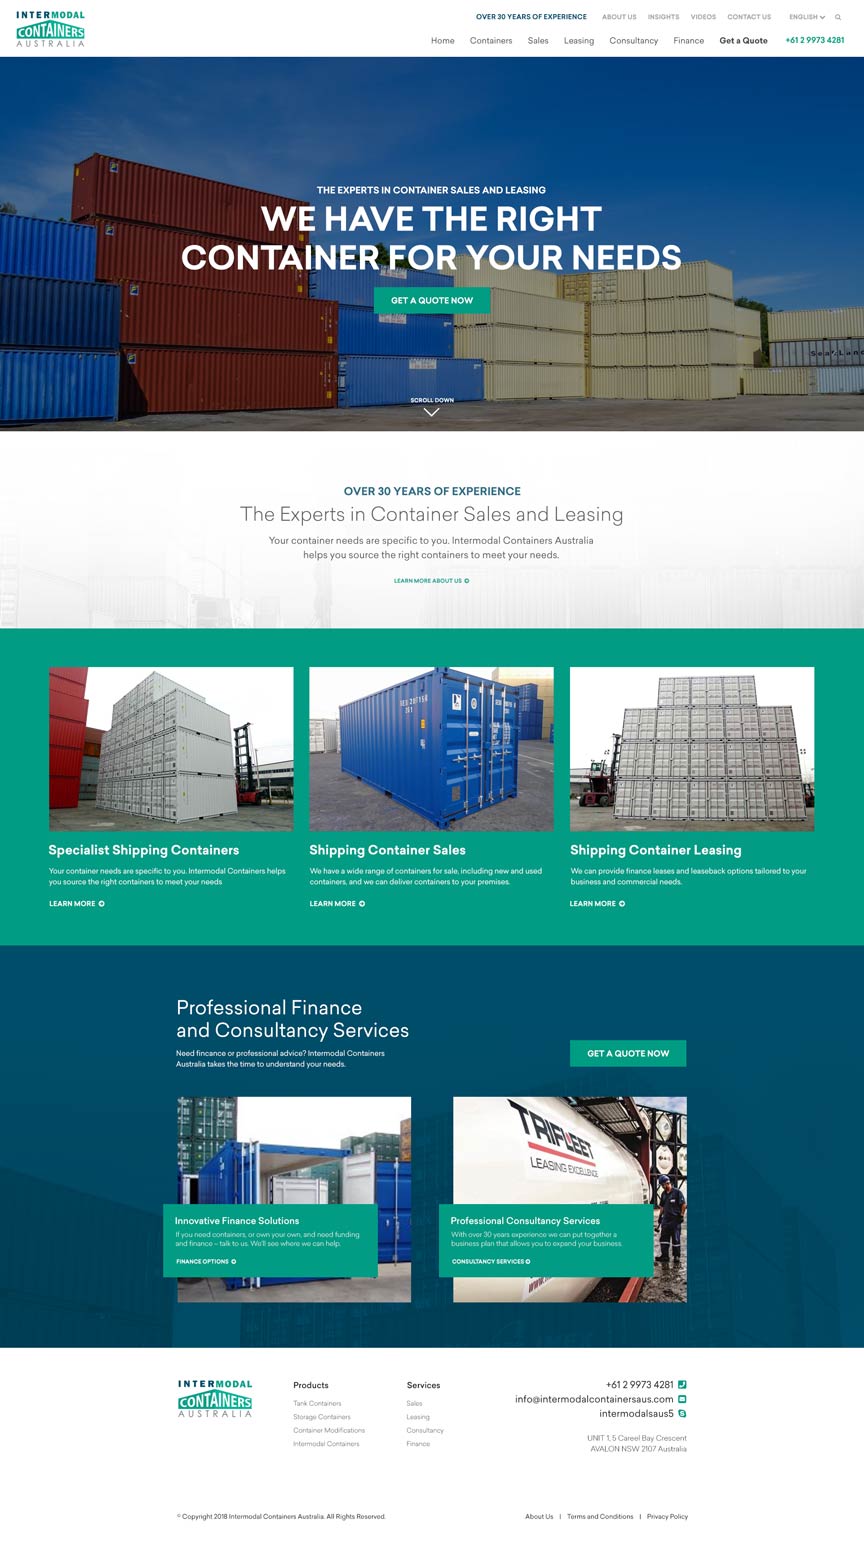 Intermodal Containers Australia website design